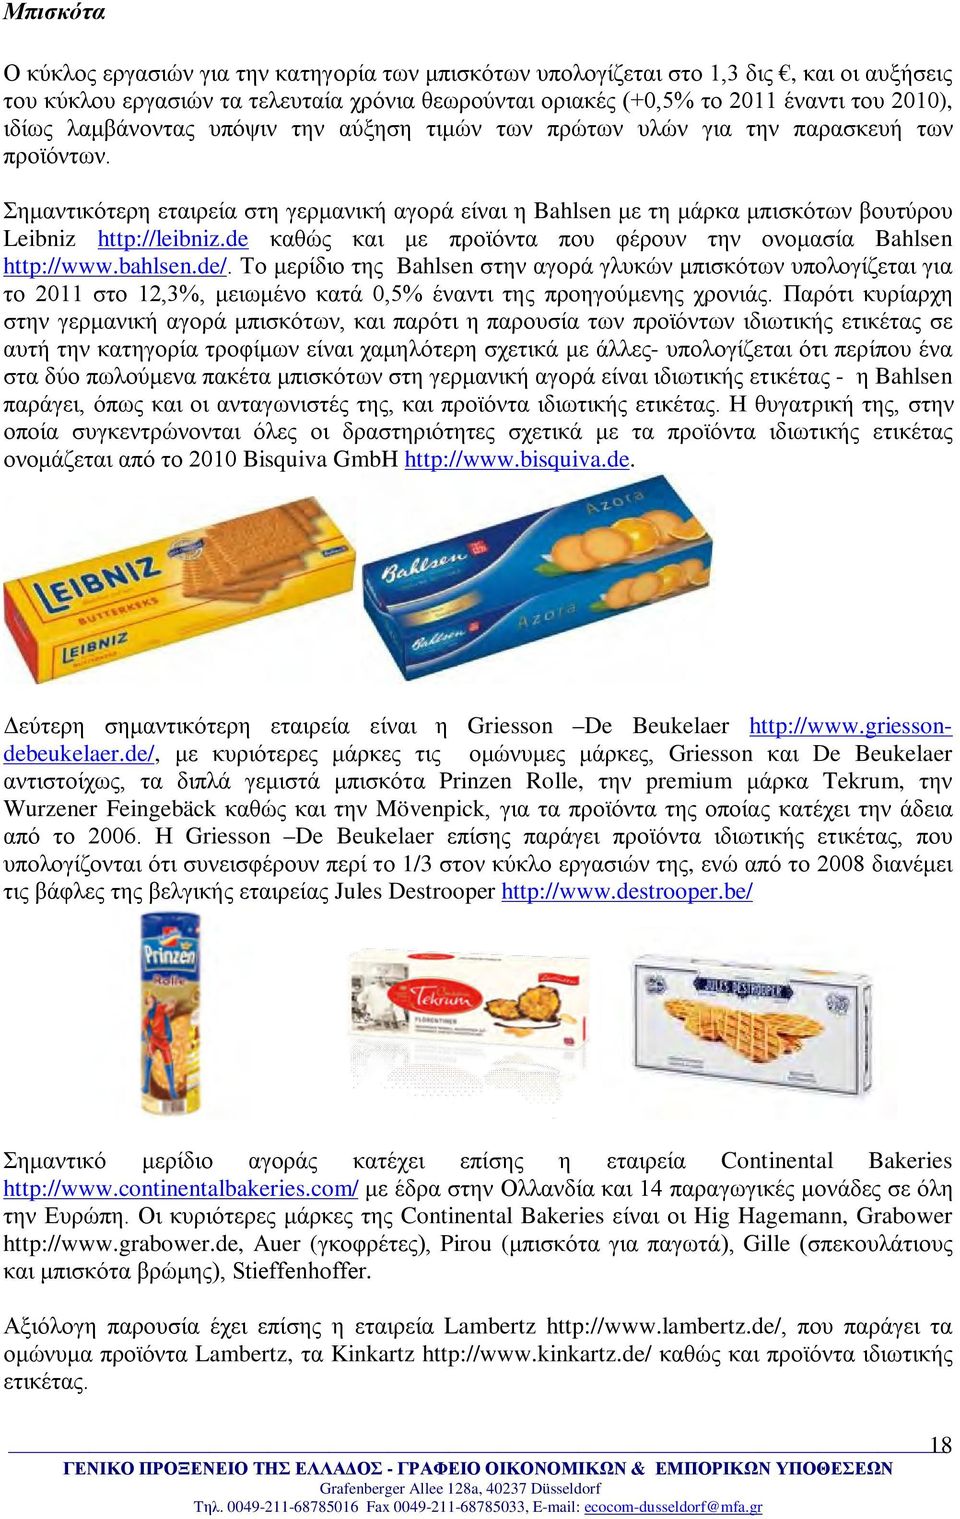 de καθώς και με προϊόντα που φέρουν την ονομασία Bahlsen http://www.bahlsen.de/.